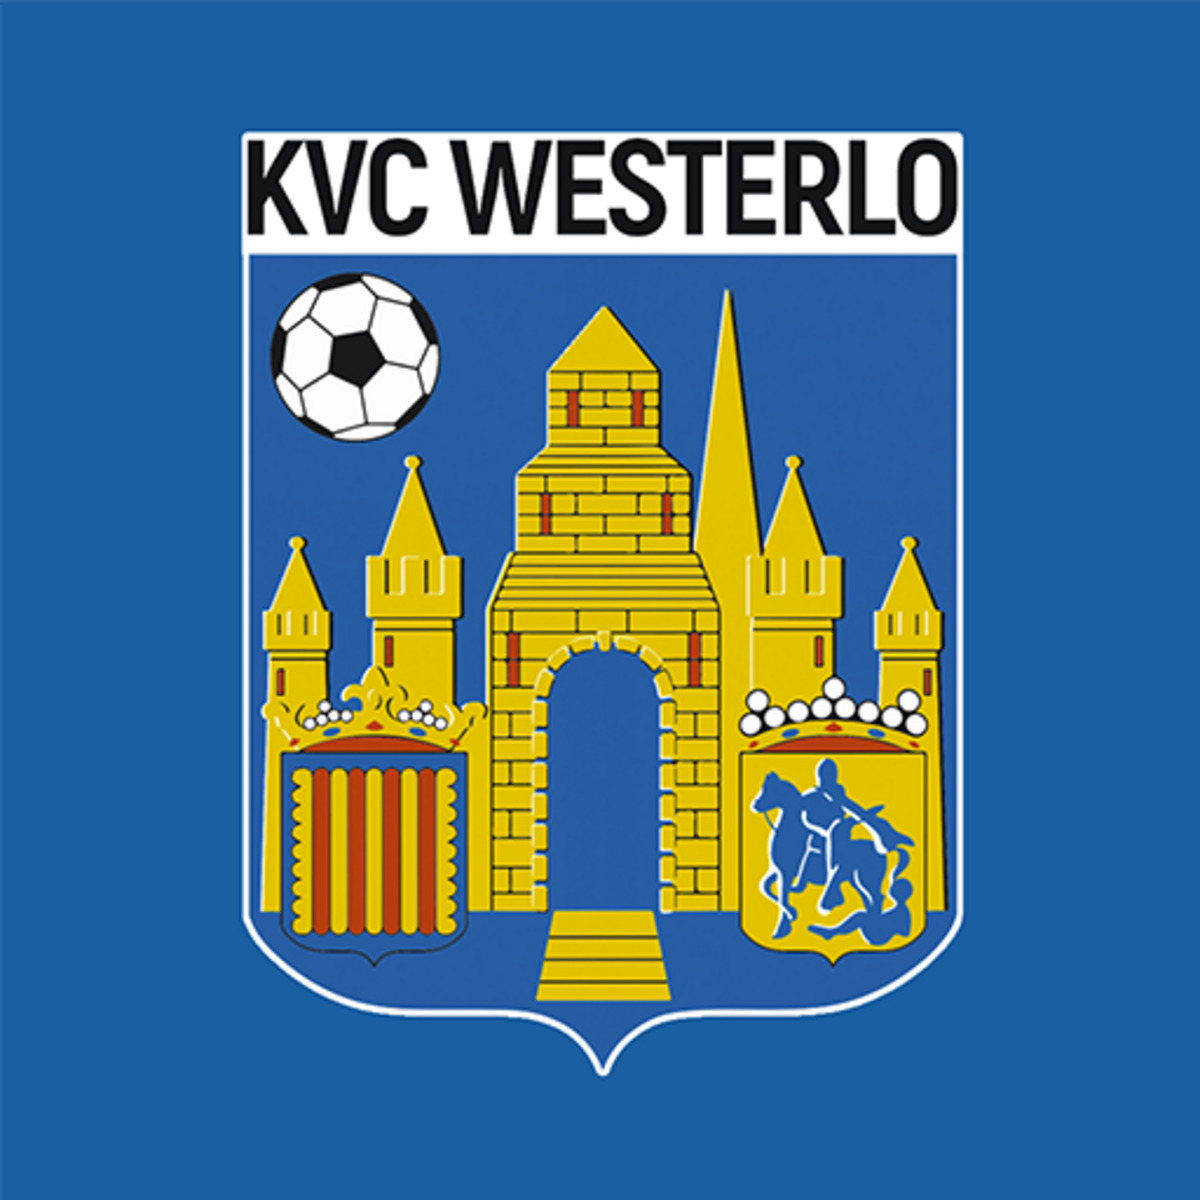 kvc-westerlo-25-football-club-facts